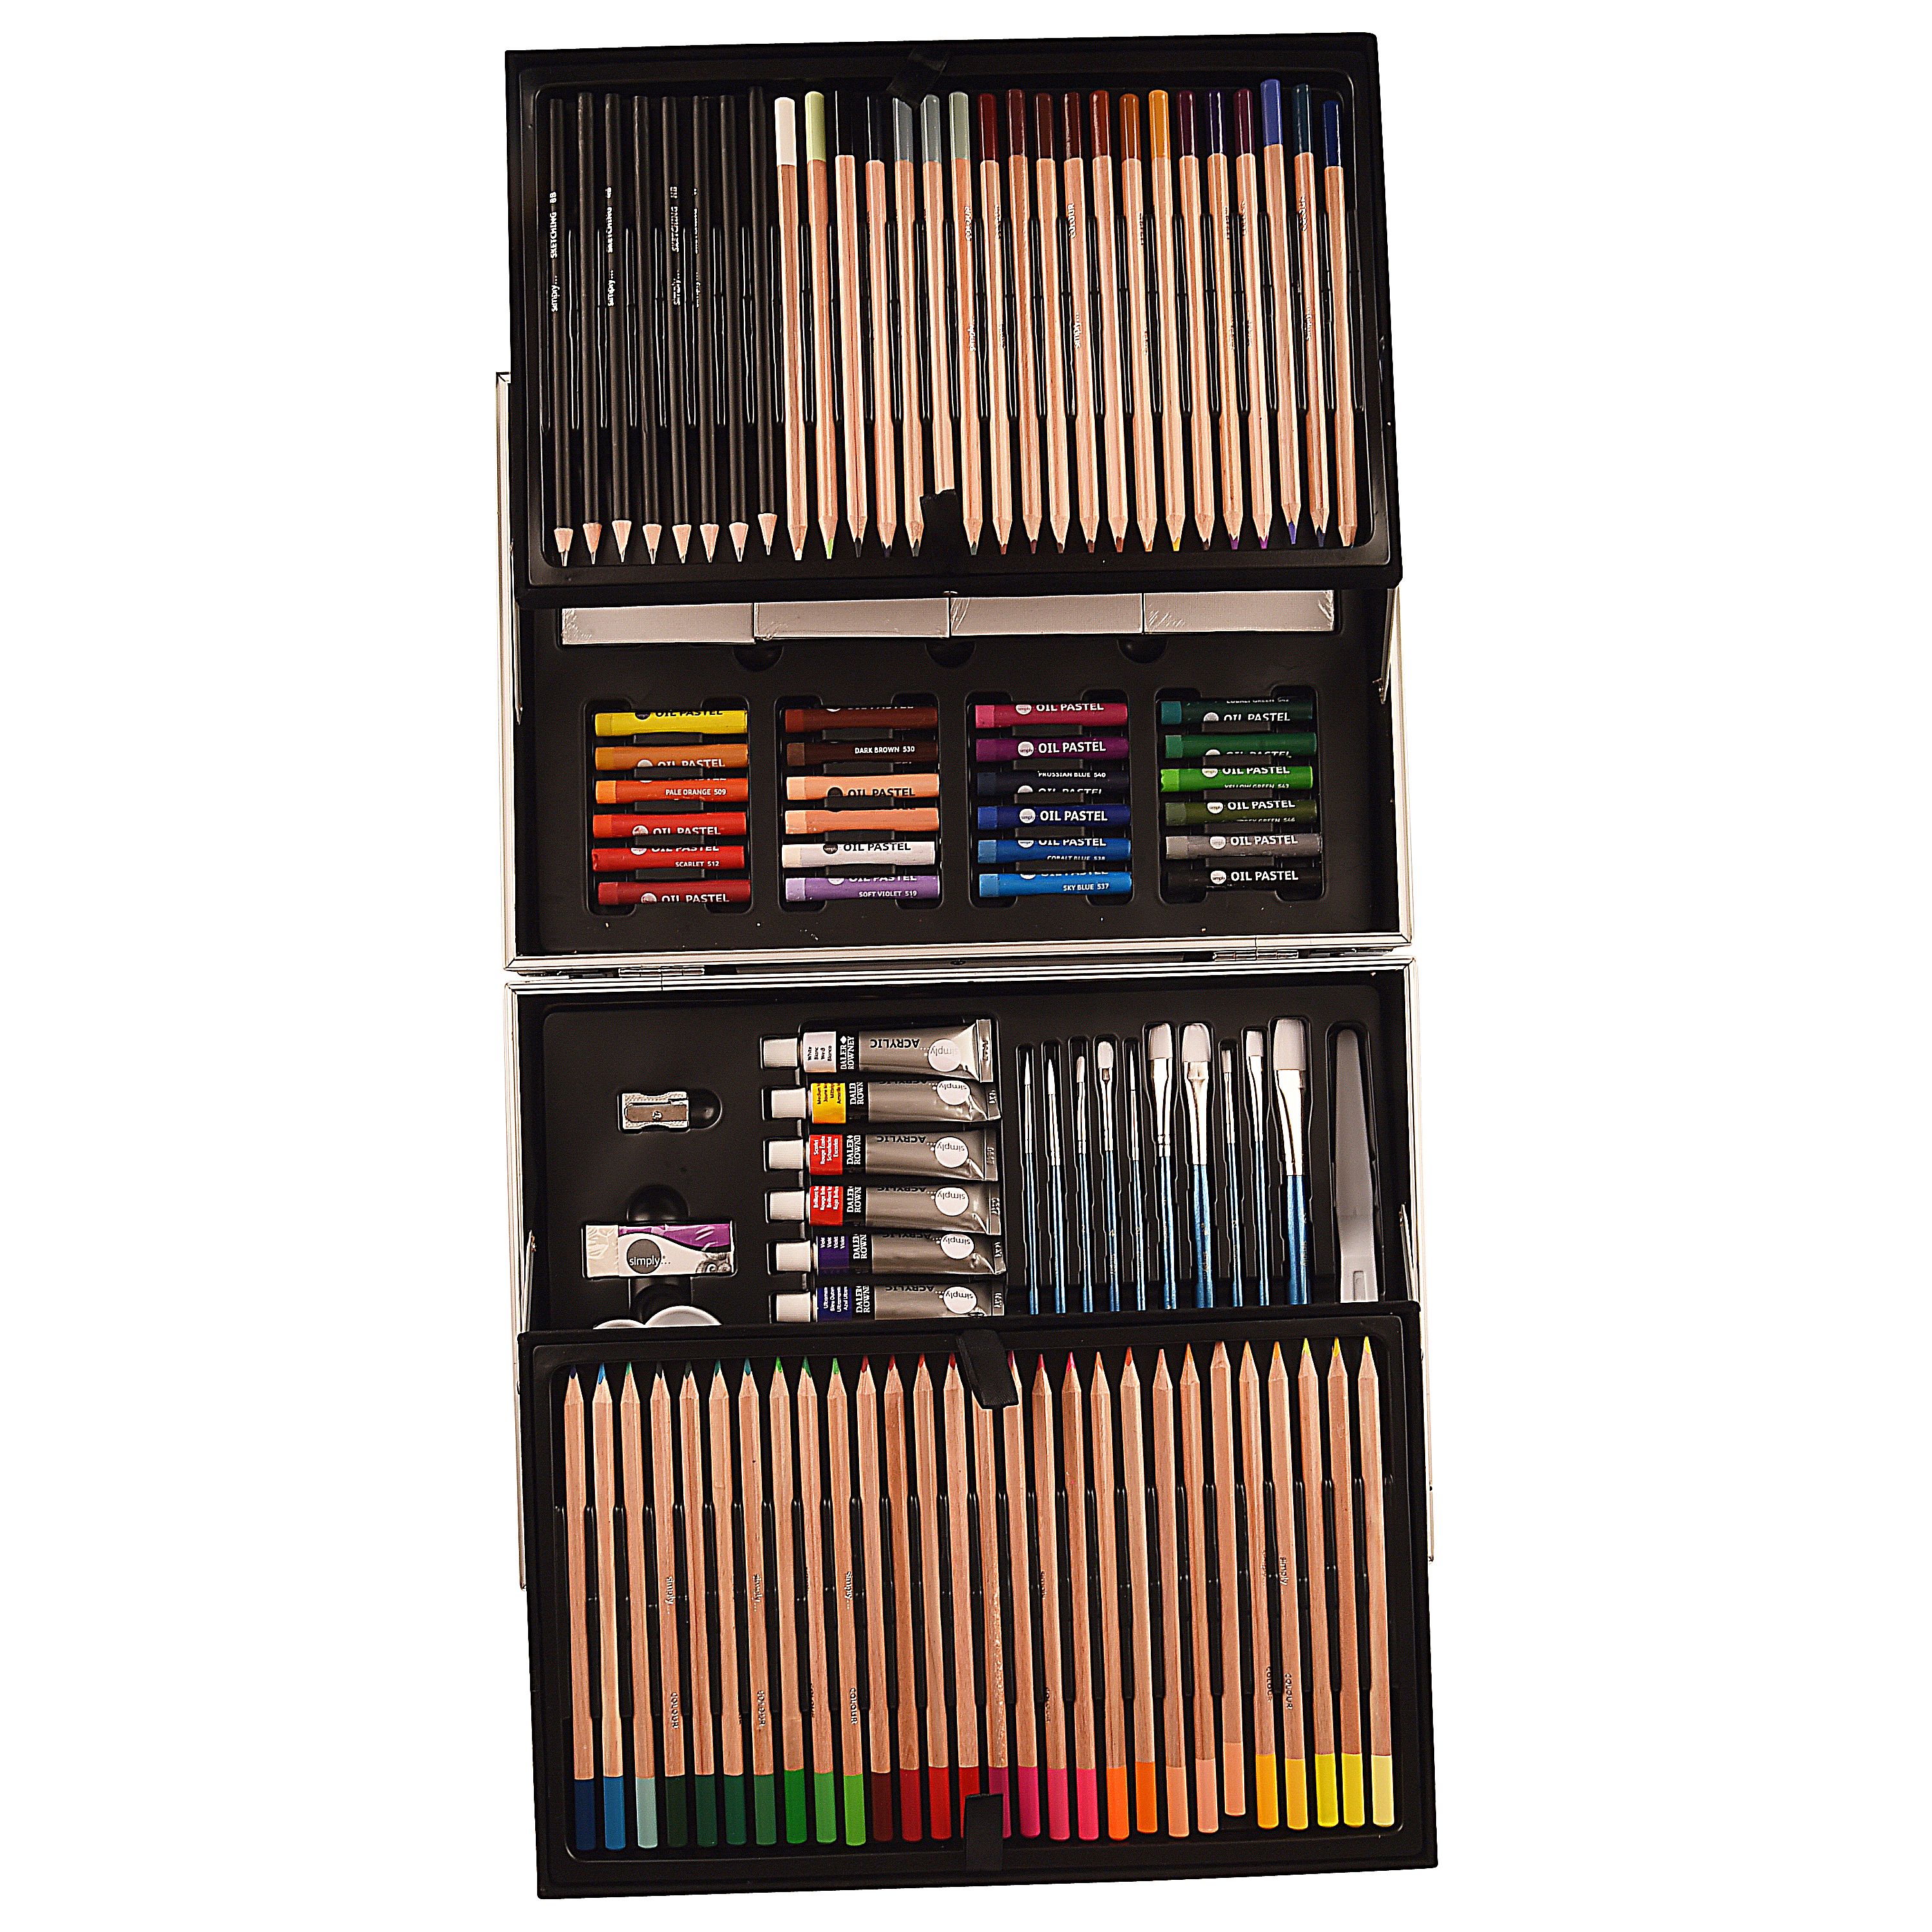 Daler-Rowney Simply Artist Kit, Multi Medium, Multi Color, 122 Pieces, 1 Each - image 3 of 7